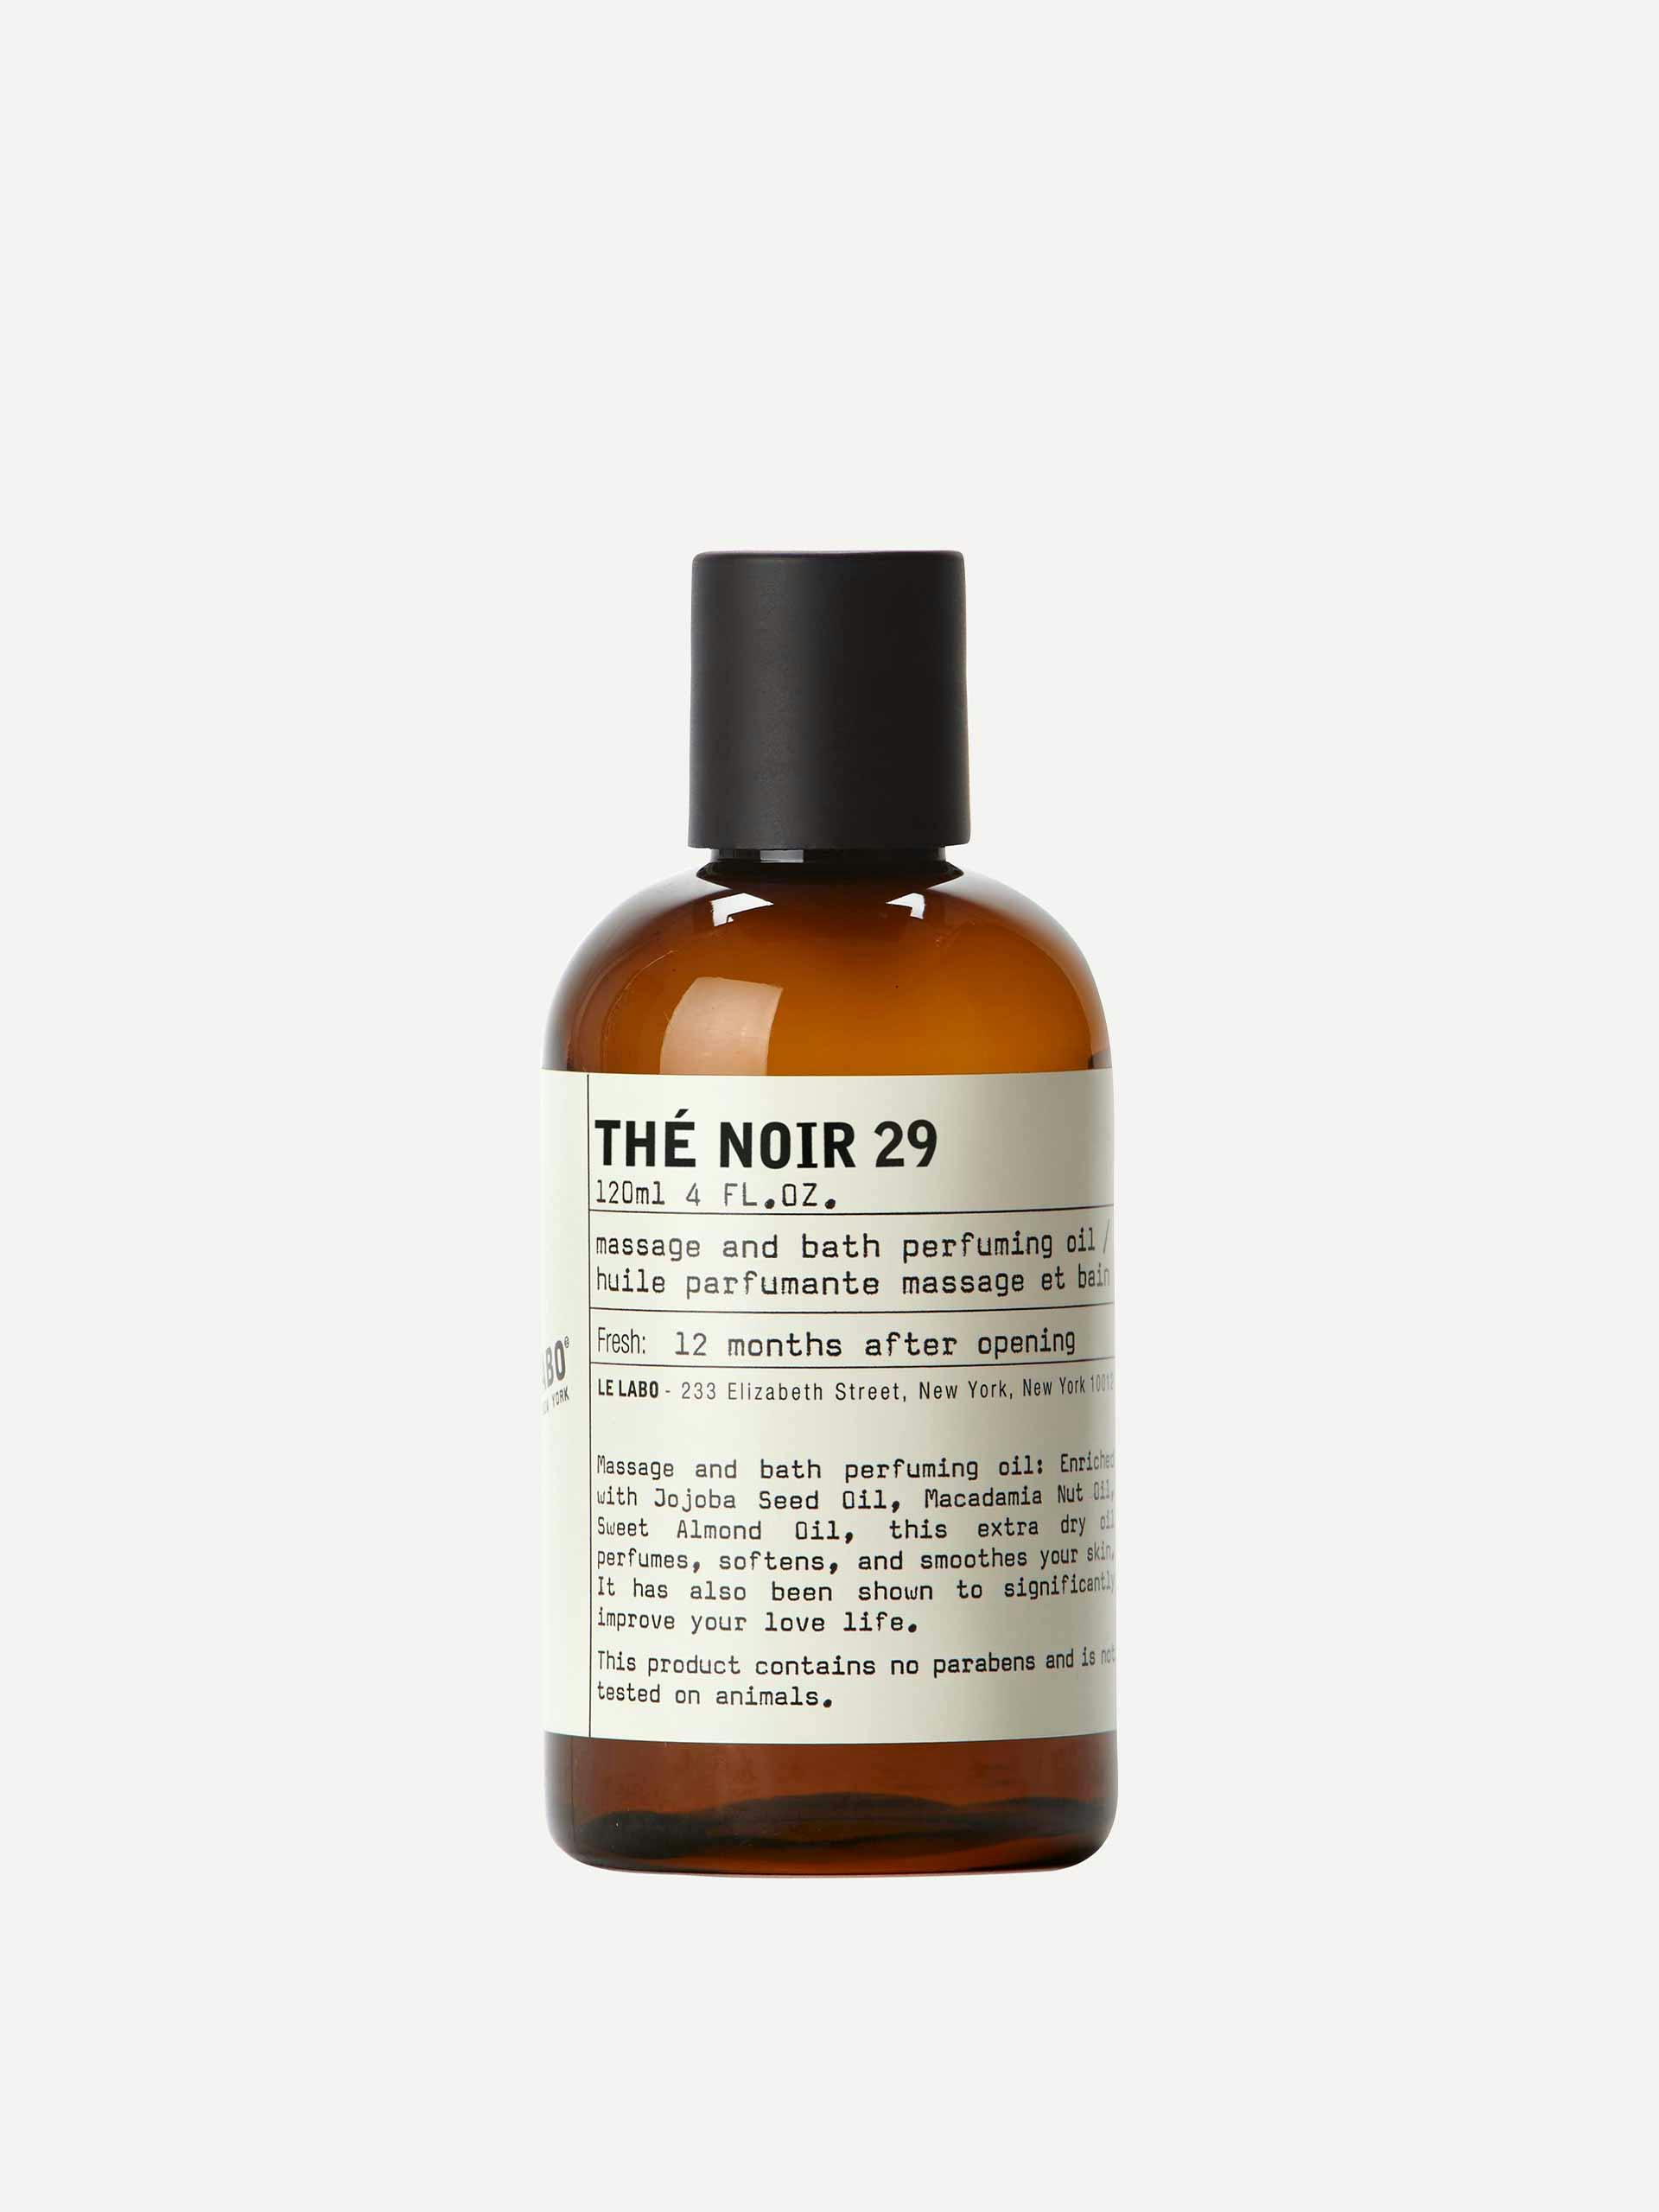 Nior 29 bath and body oil